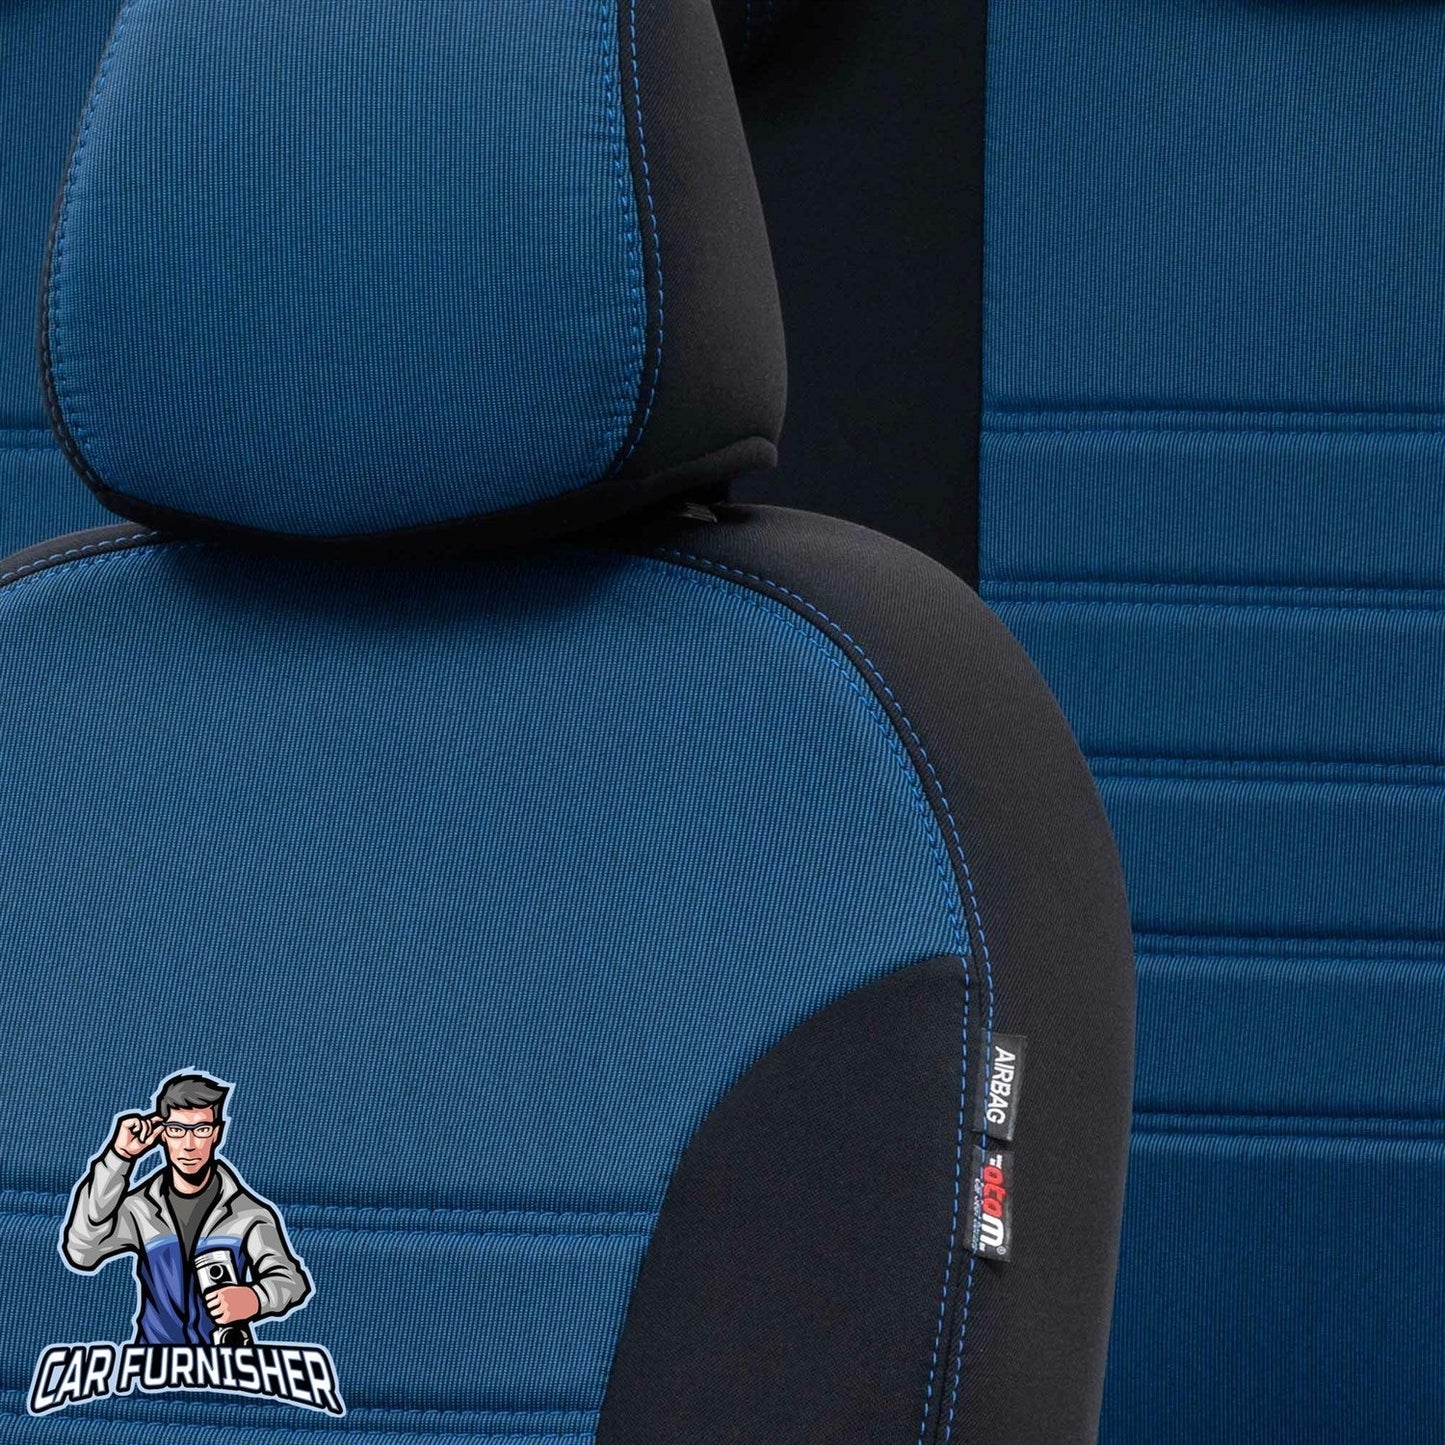 Peugeot 206 Seat Covers Original Jacquard Design Blue Jacquard Fabric